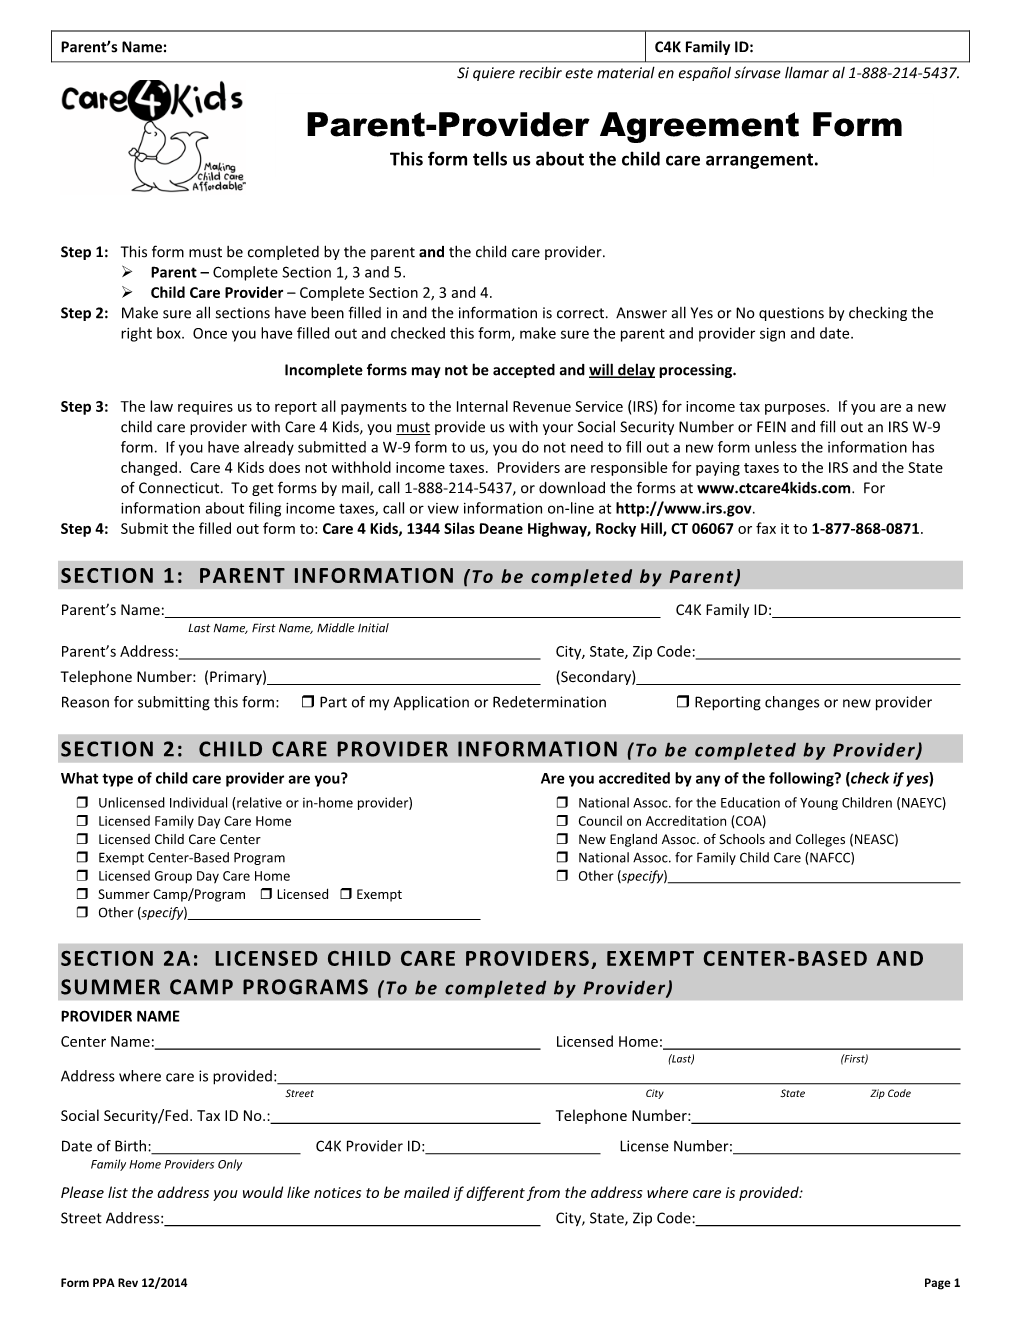 Parent-Provider Agreement Form This Form Tells Us About the Child Care Arrangement